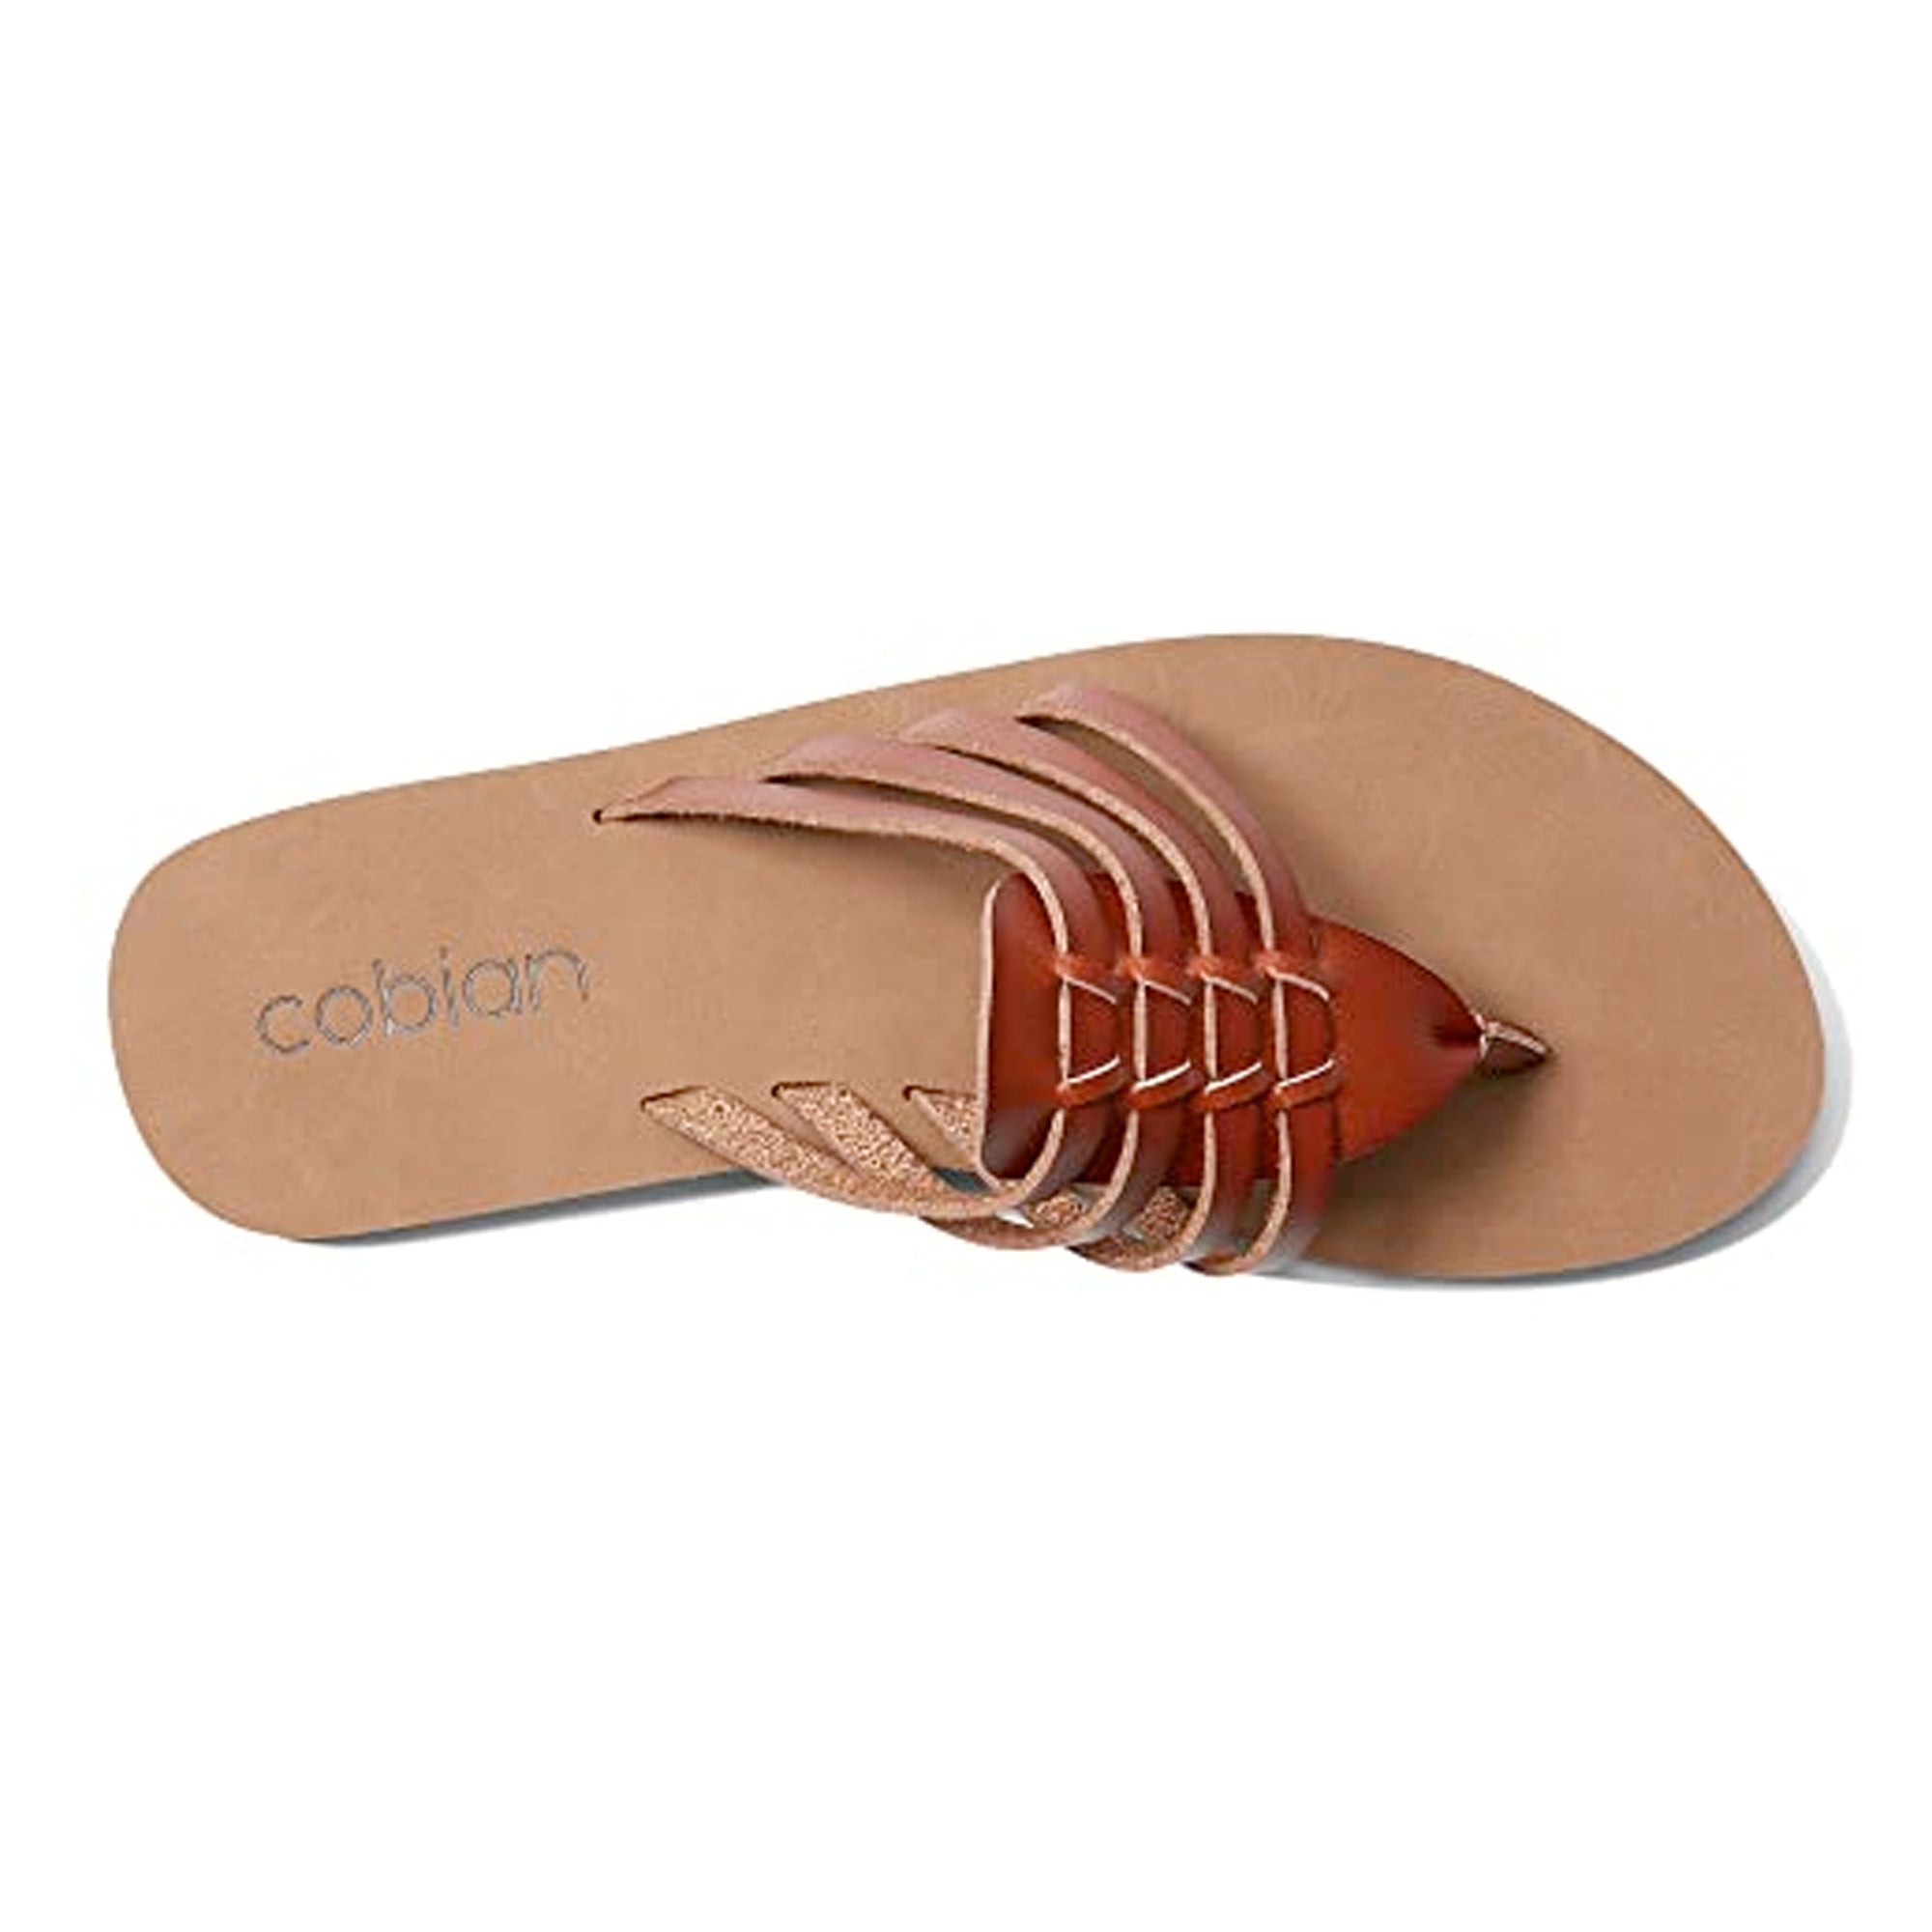 Cobian Beliza Chesnut Women's Sandals